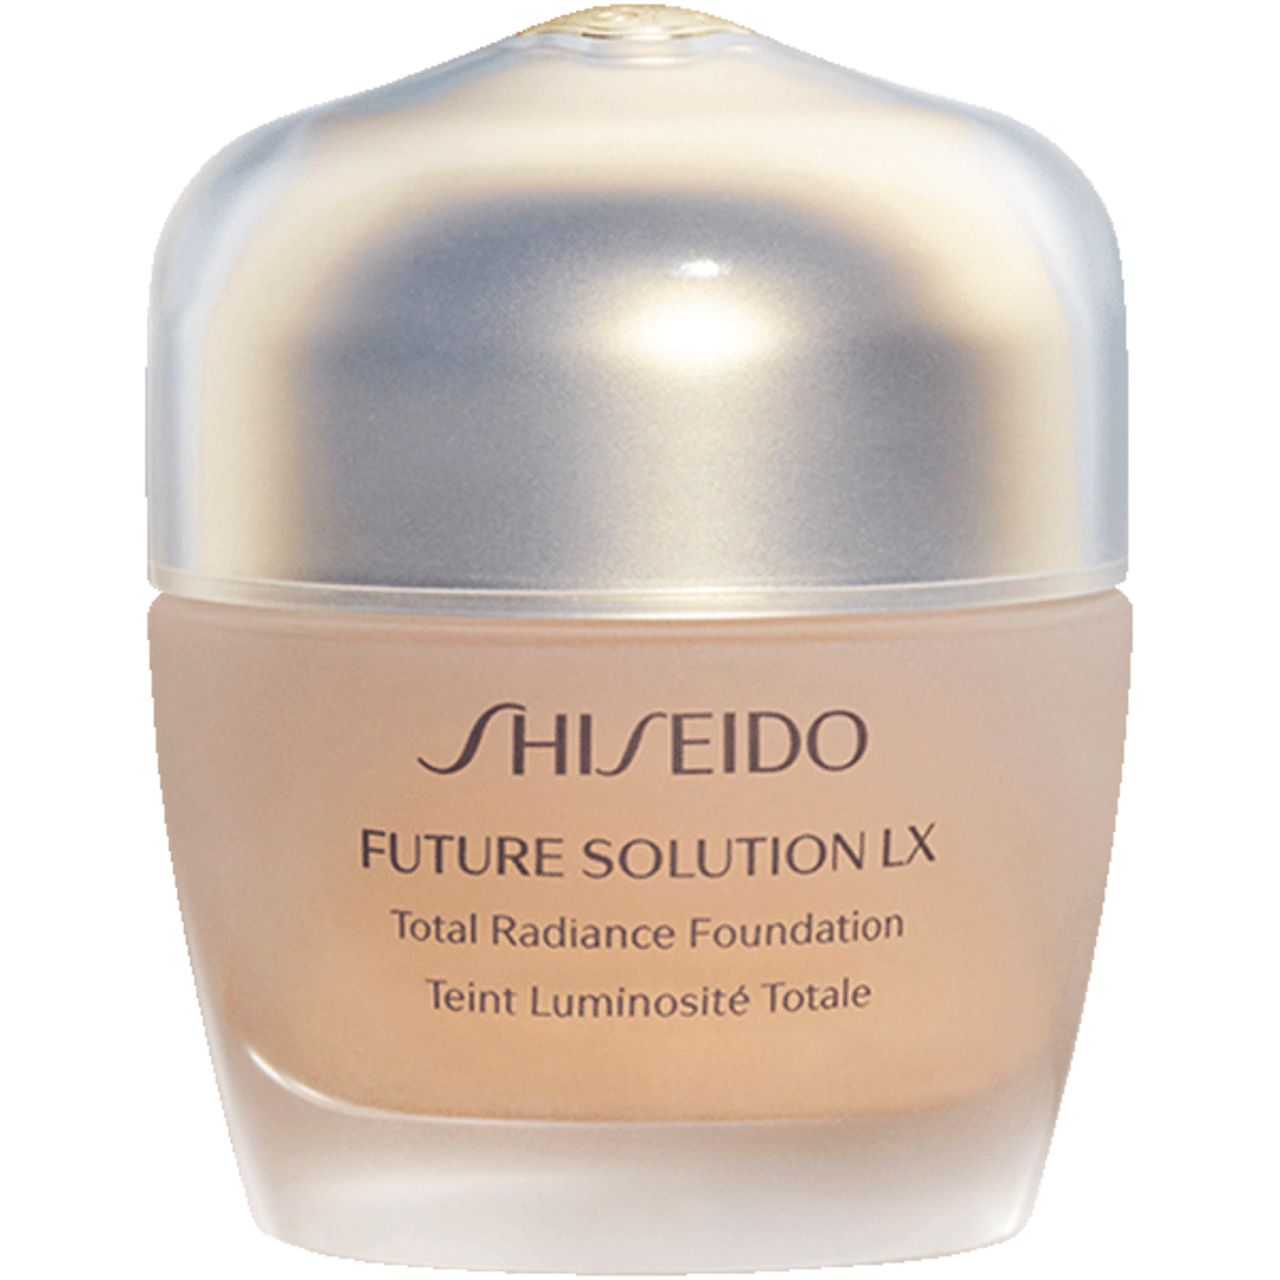 Shiseido, Future Solution LX Total Radiance Foundation